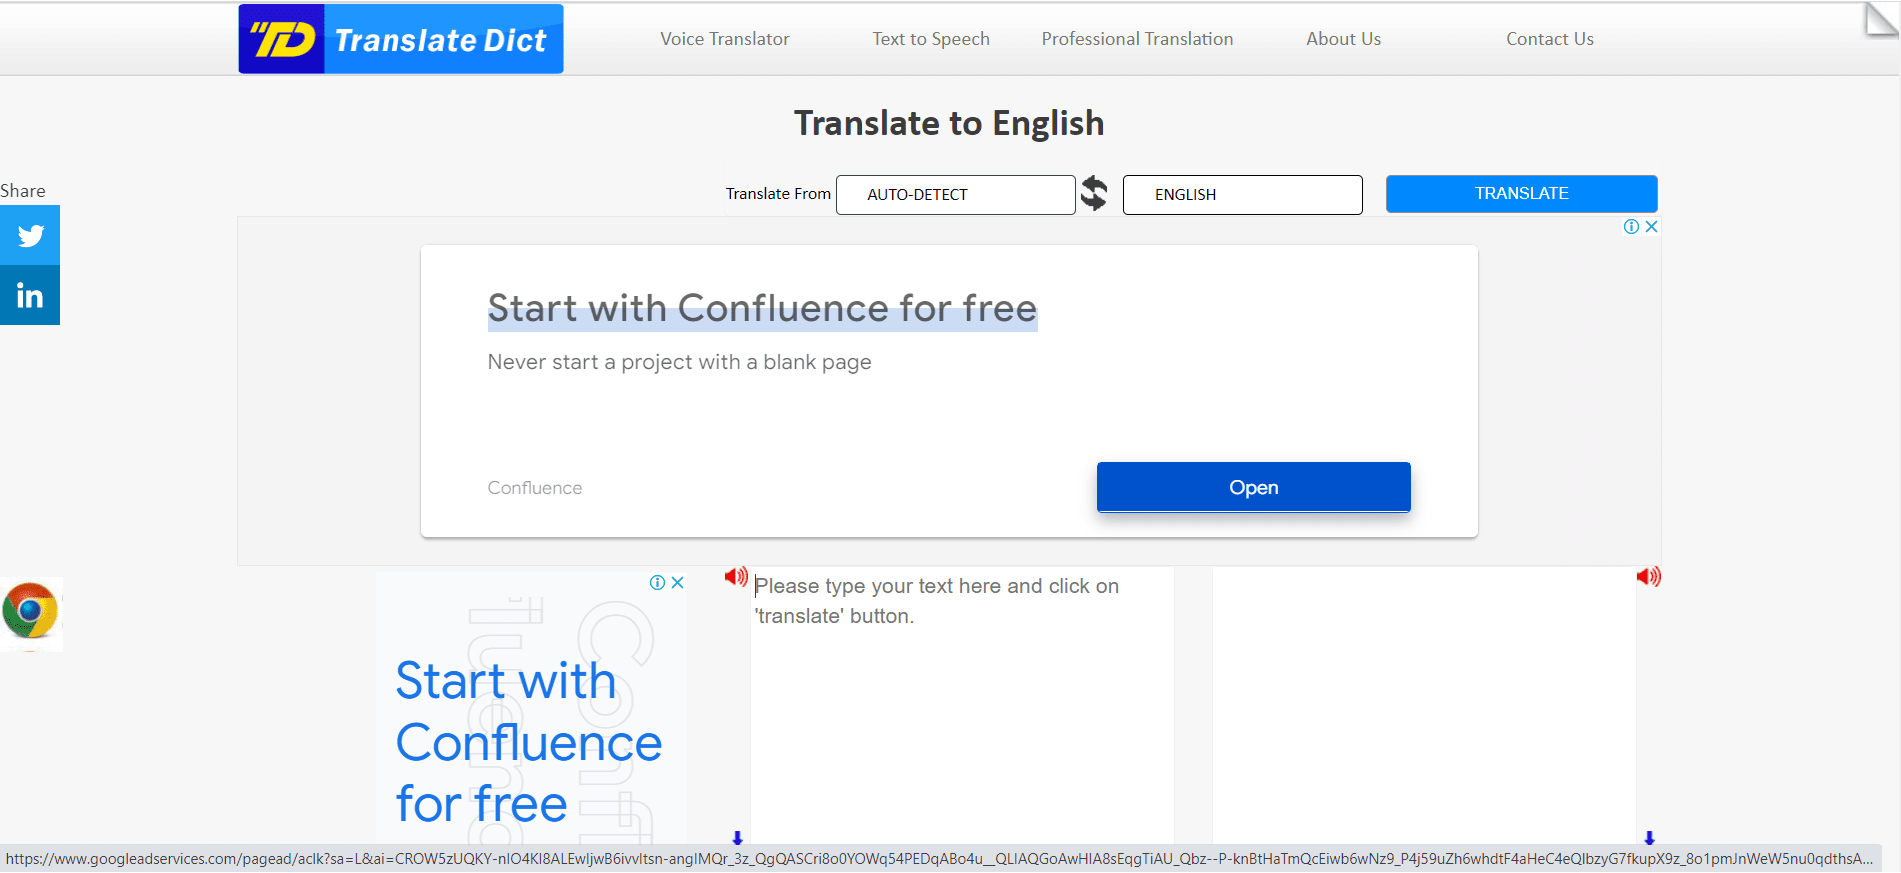 Translate Dict